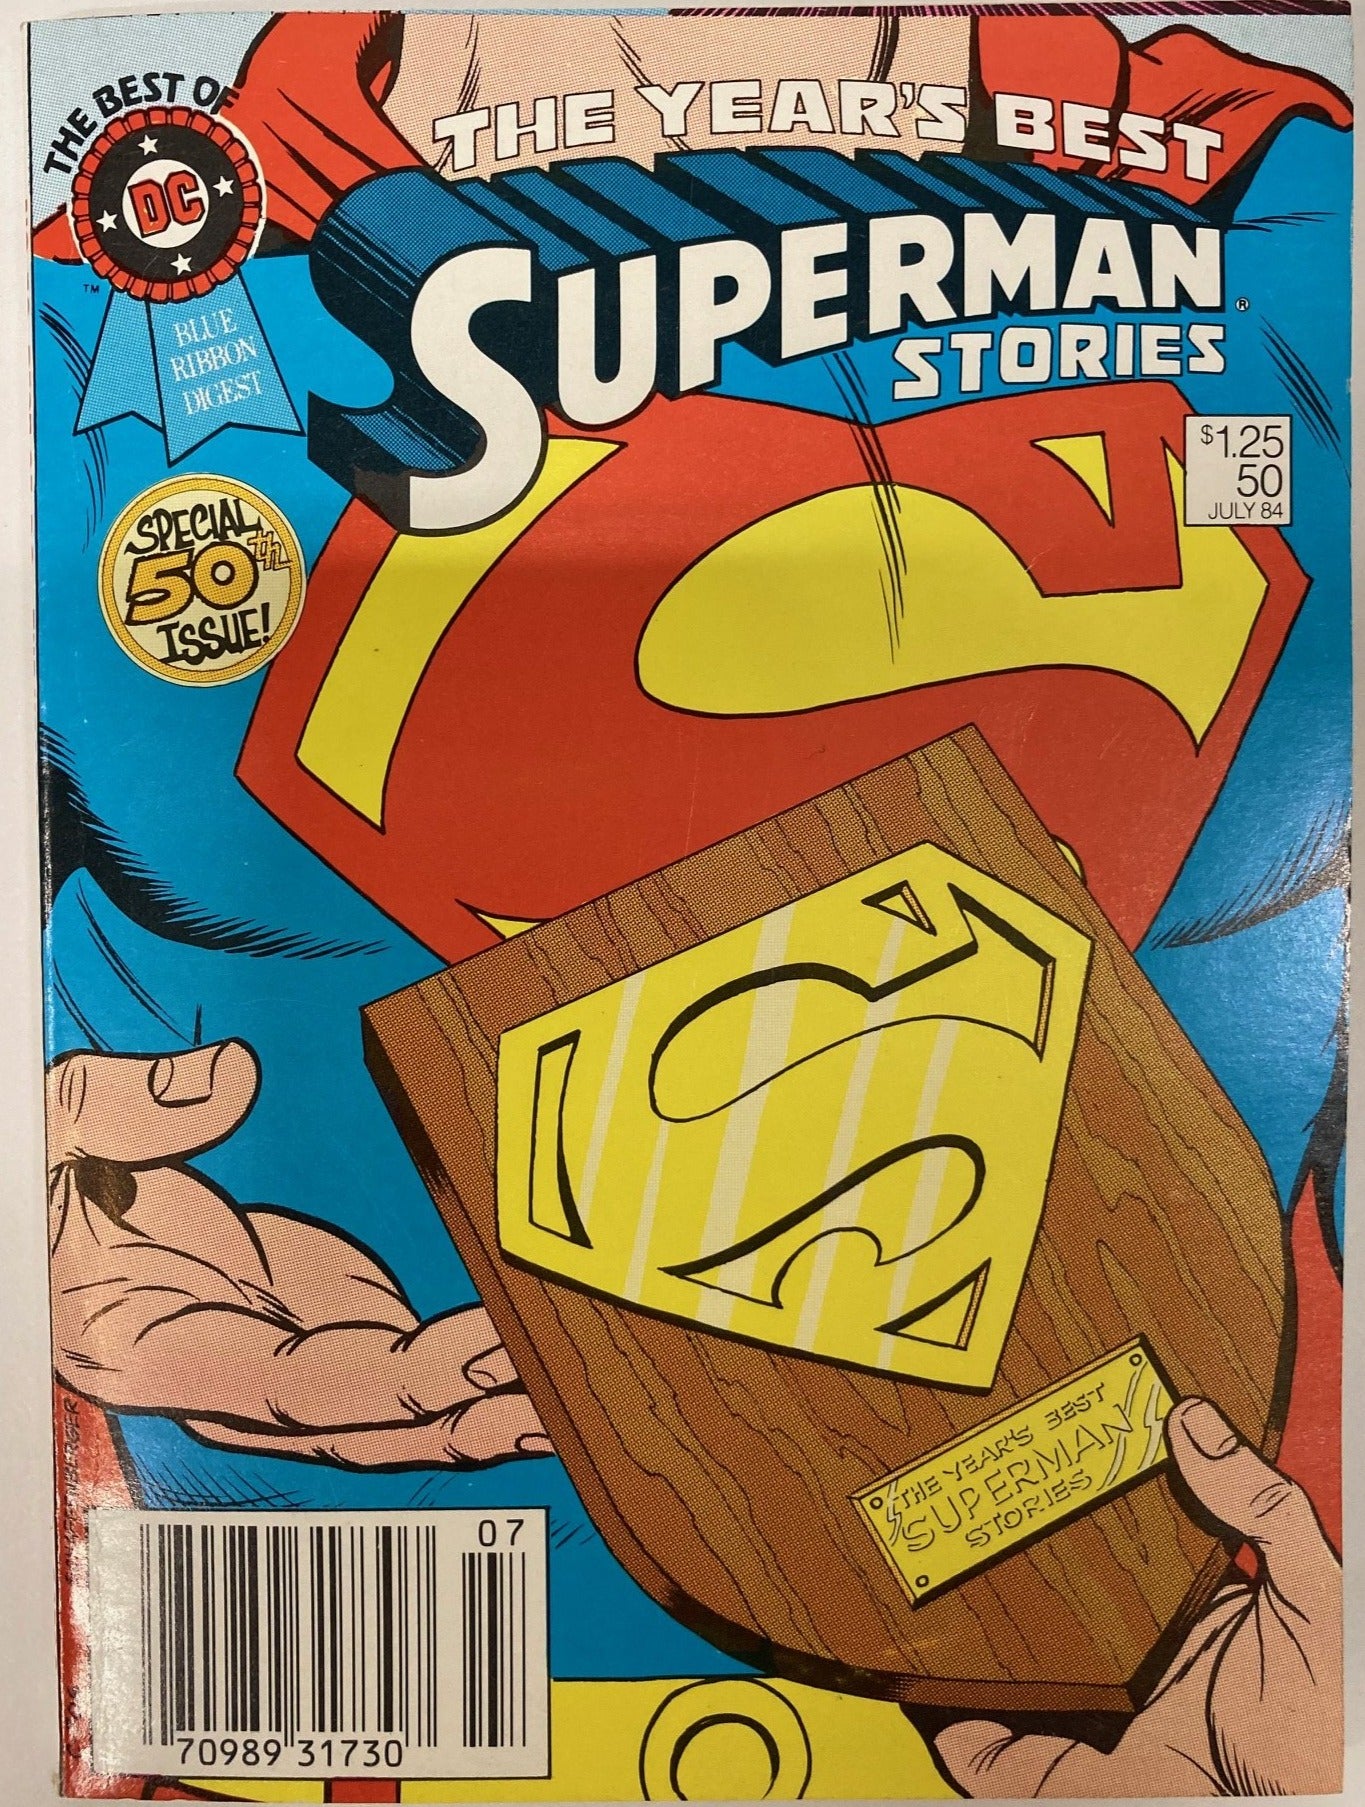 DC Blue Ribbon Digest #50 - Superman Stories